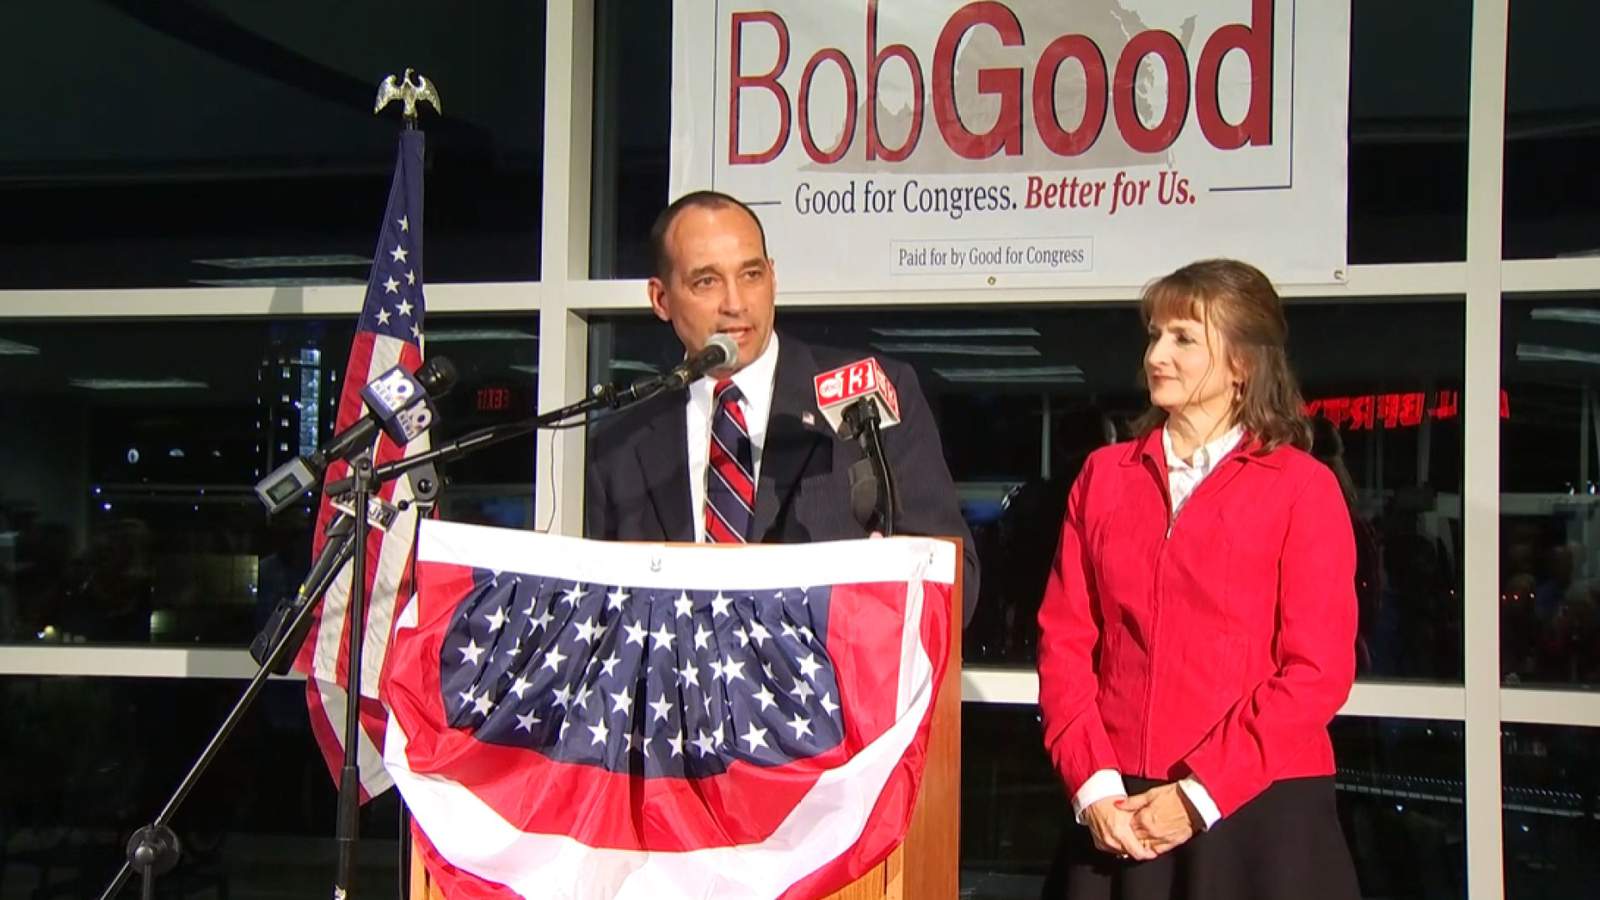 WATCH: Bob Good gives speech at headquarters in Lynchburg